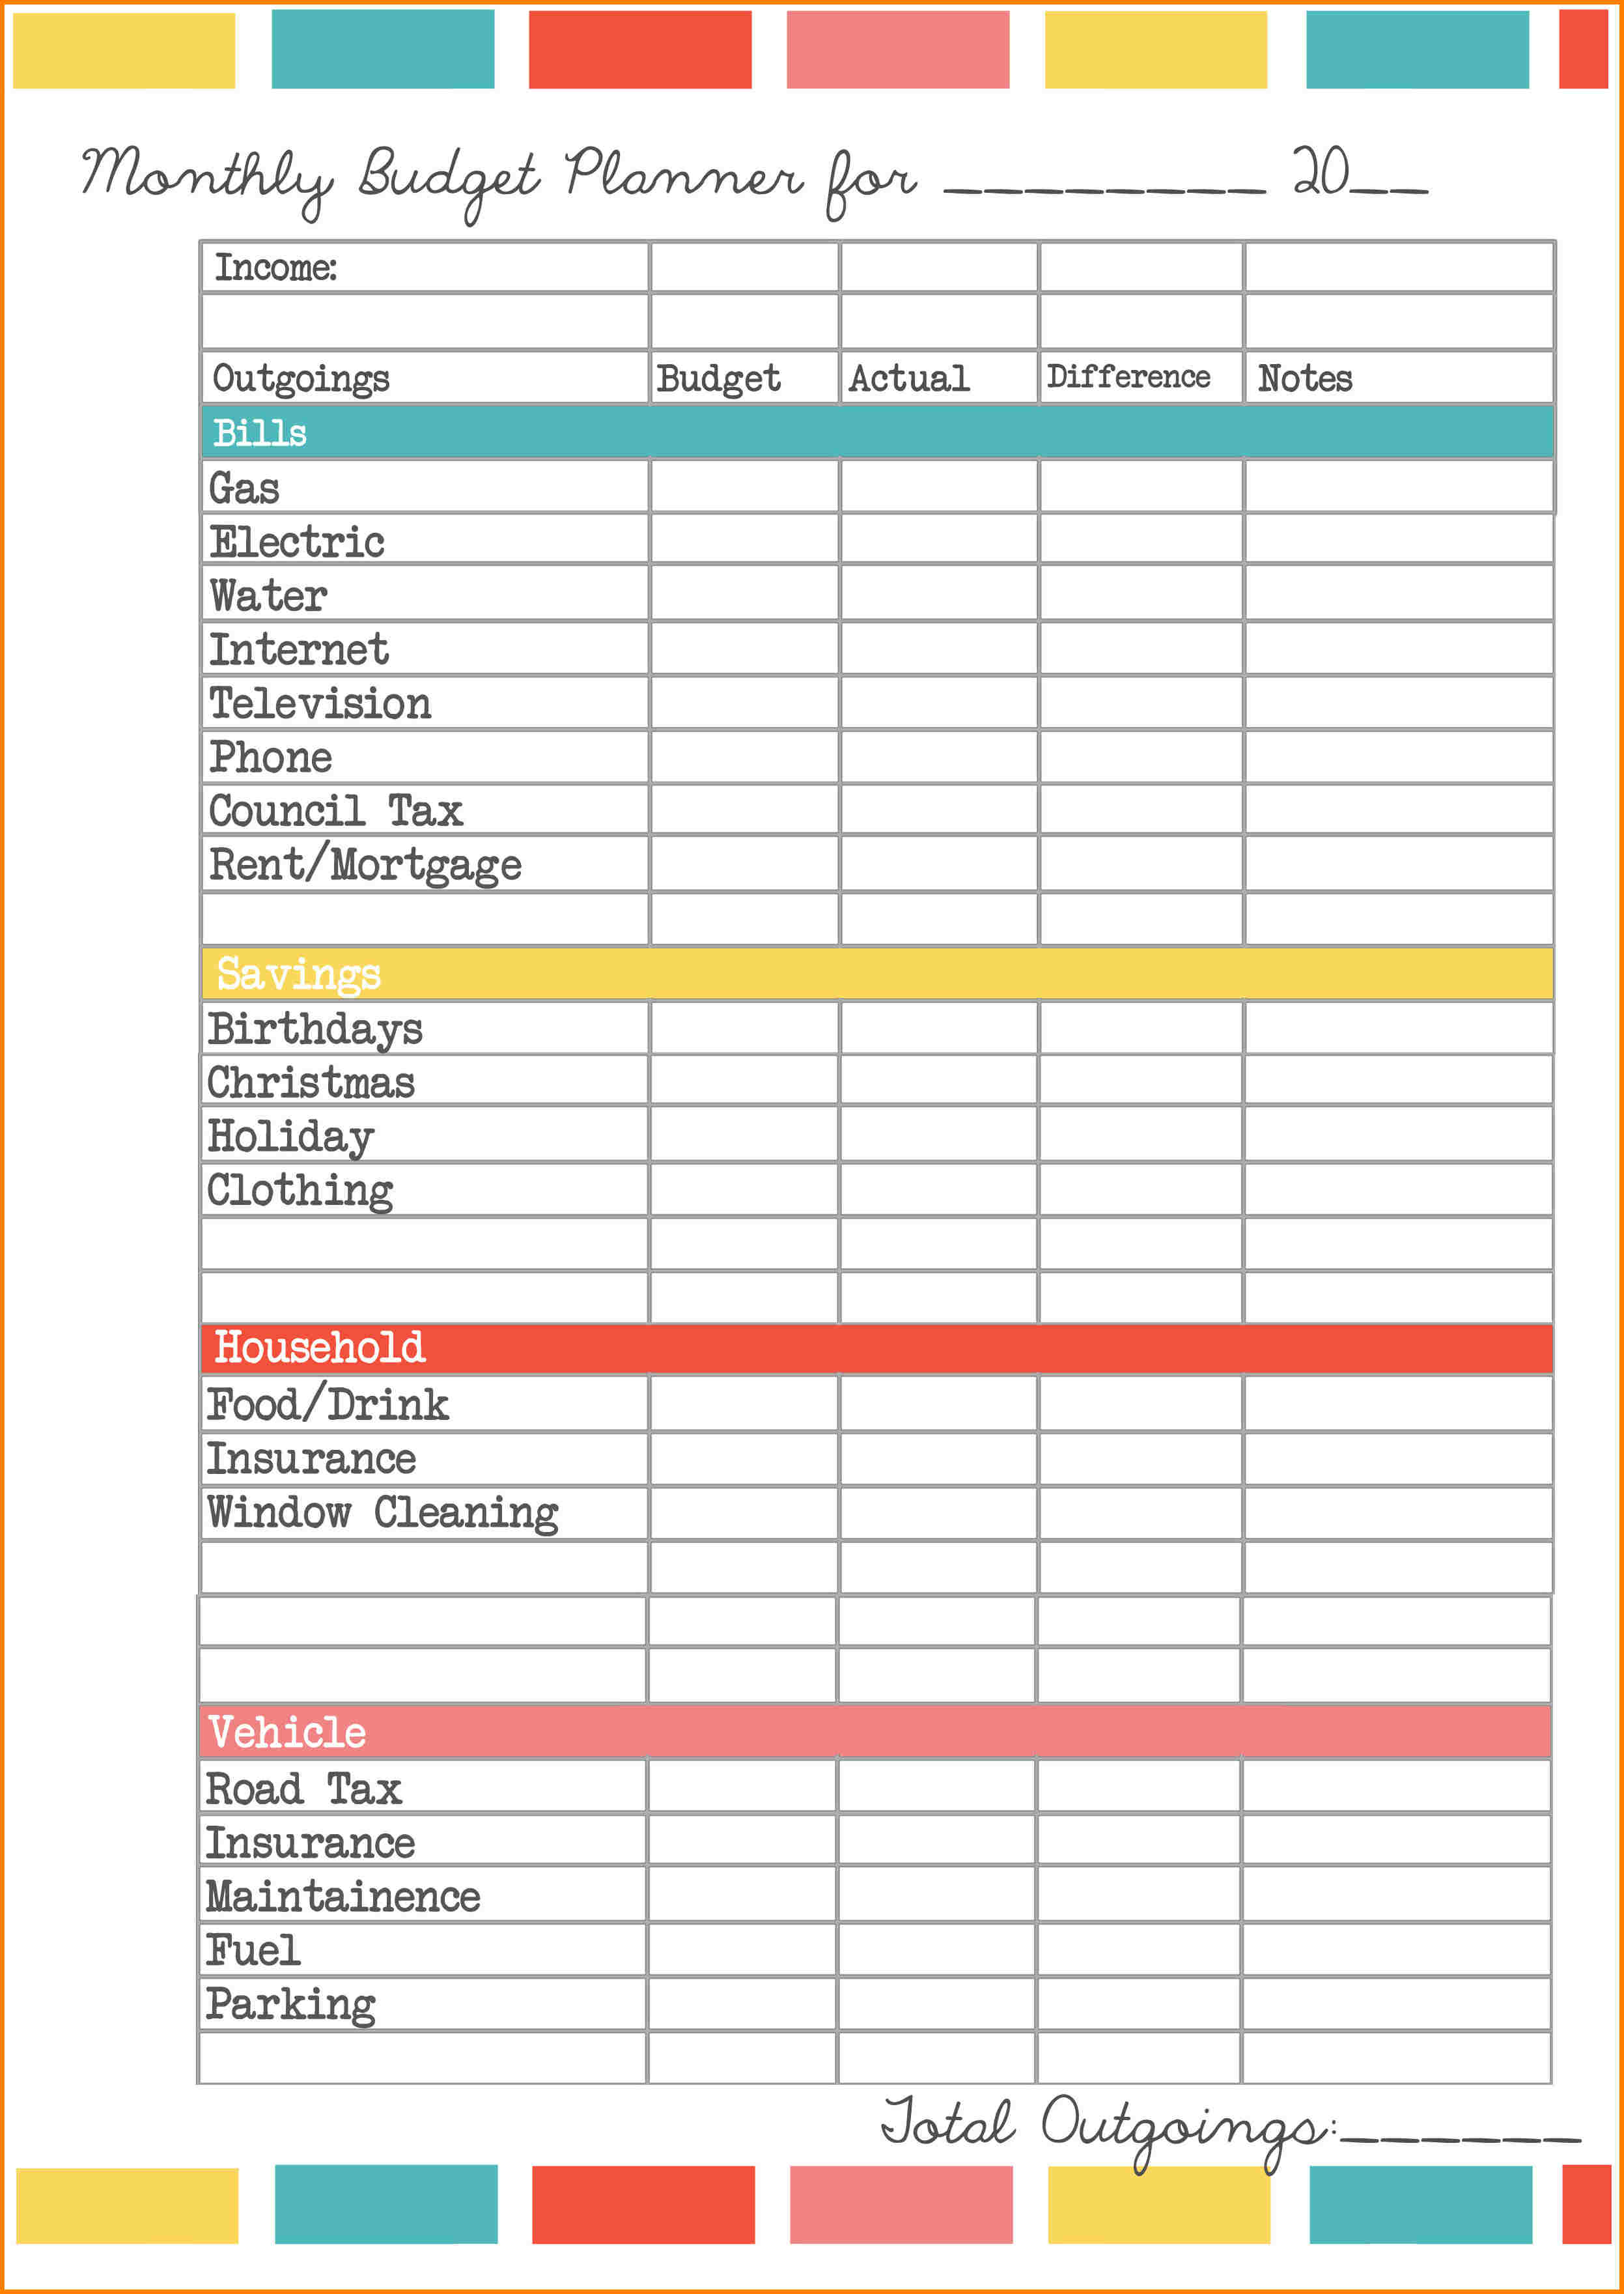 Budget Planner Spreadsheet As Spreadsheet App For Android Microsoft For Budget Plan Spreadsheet